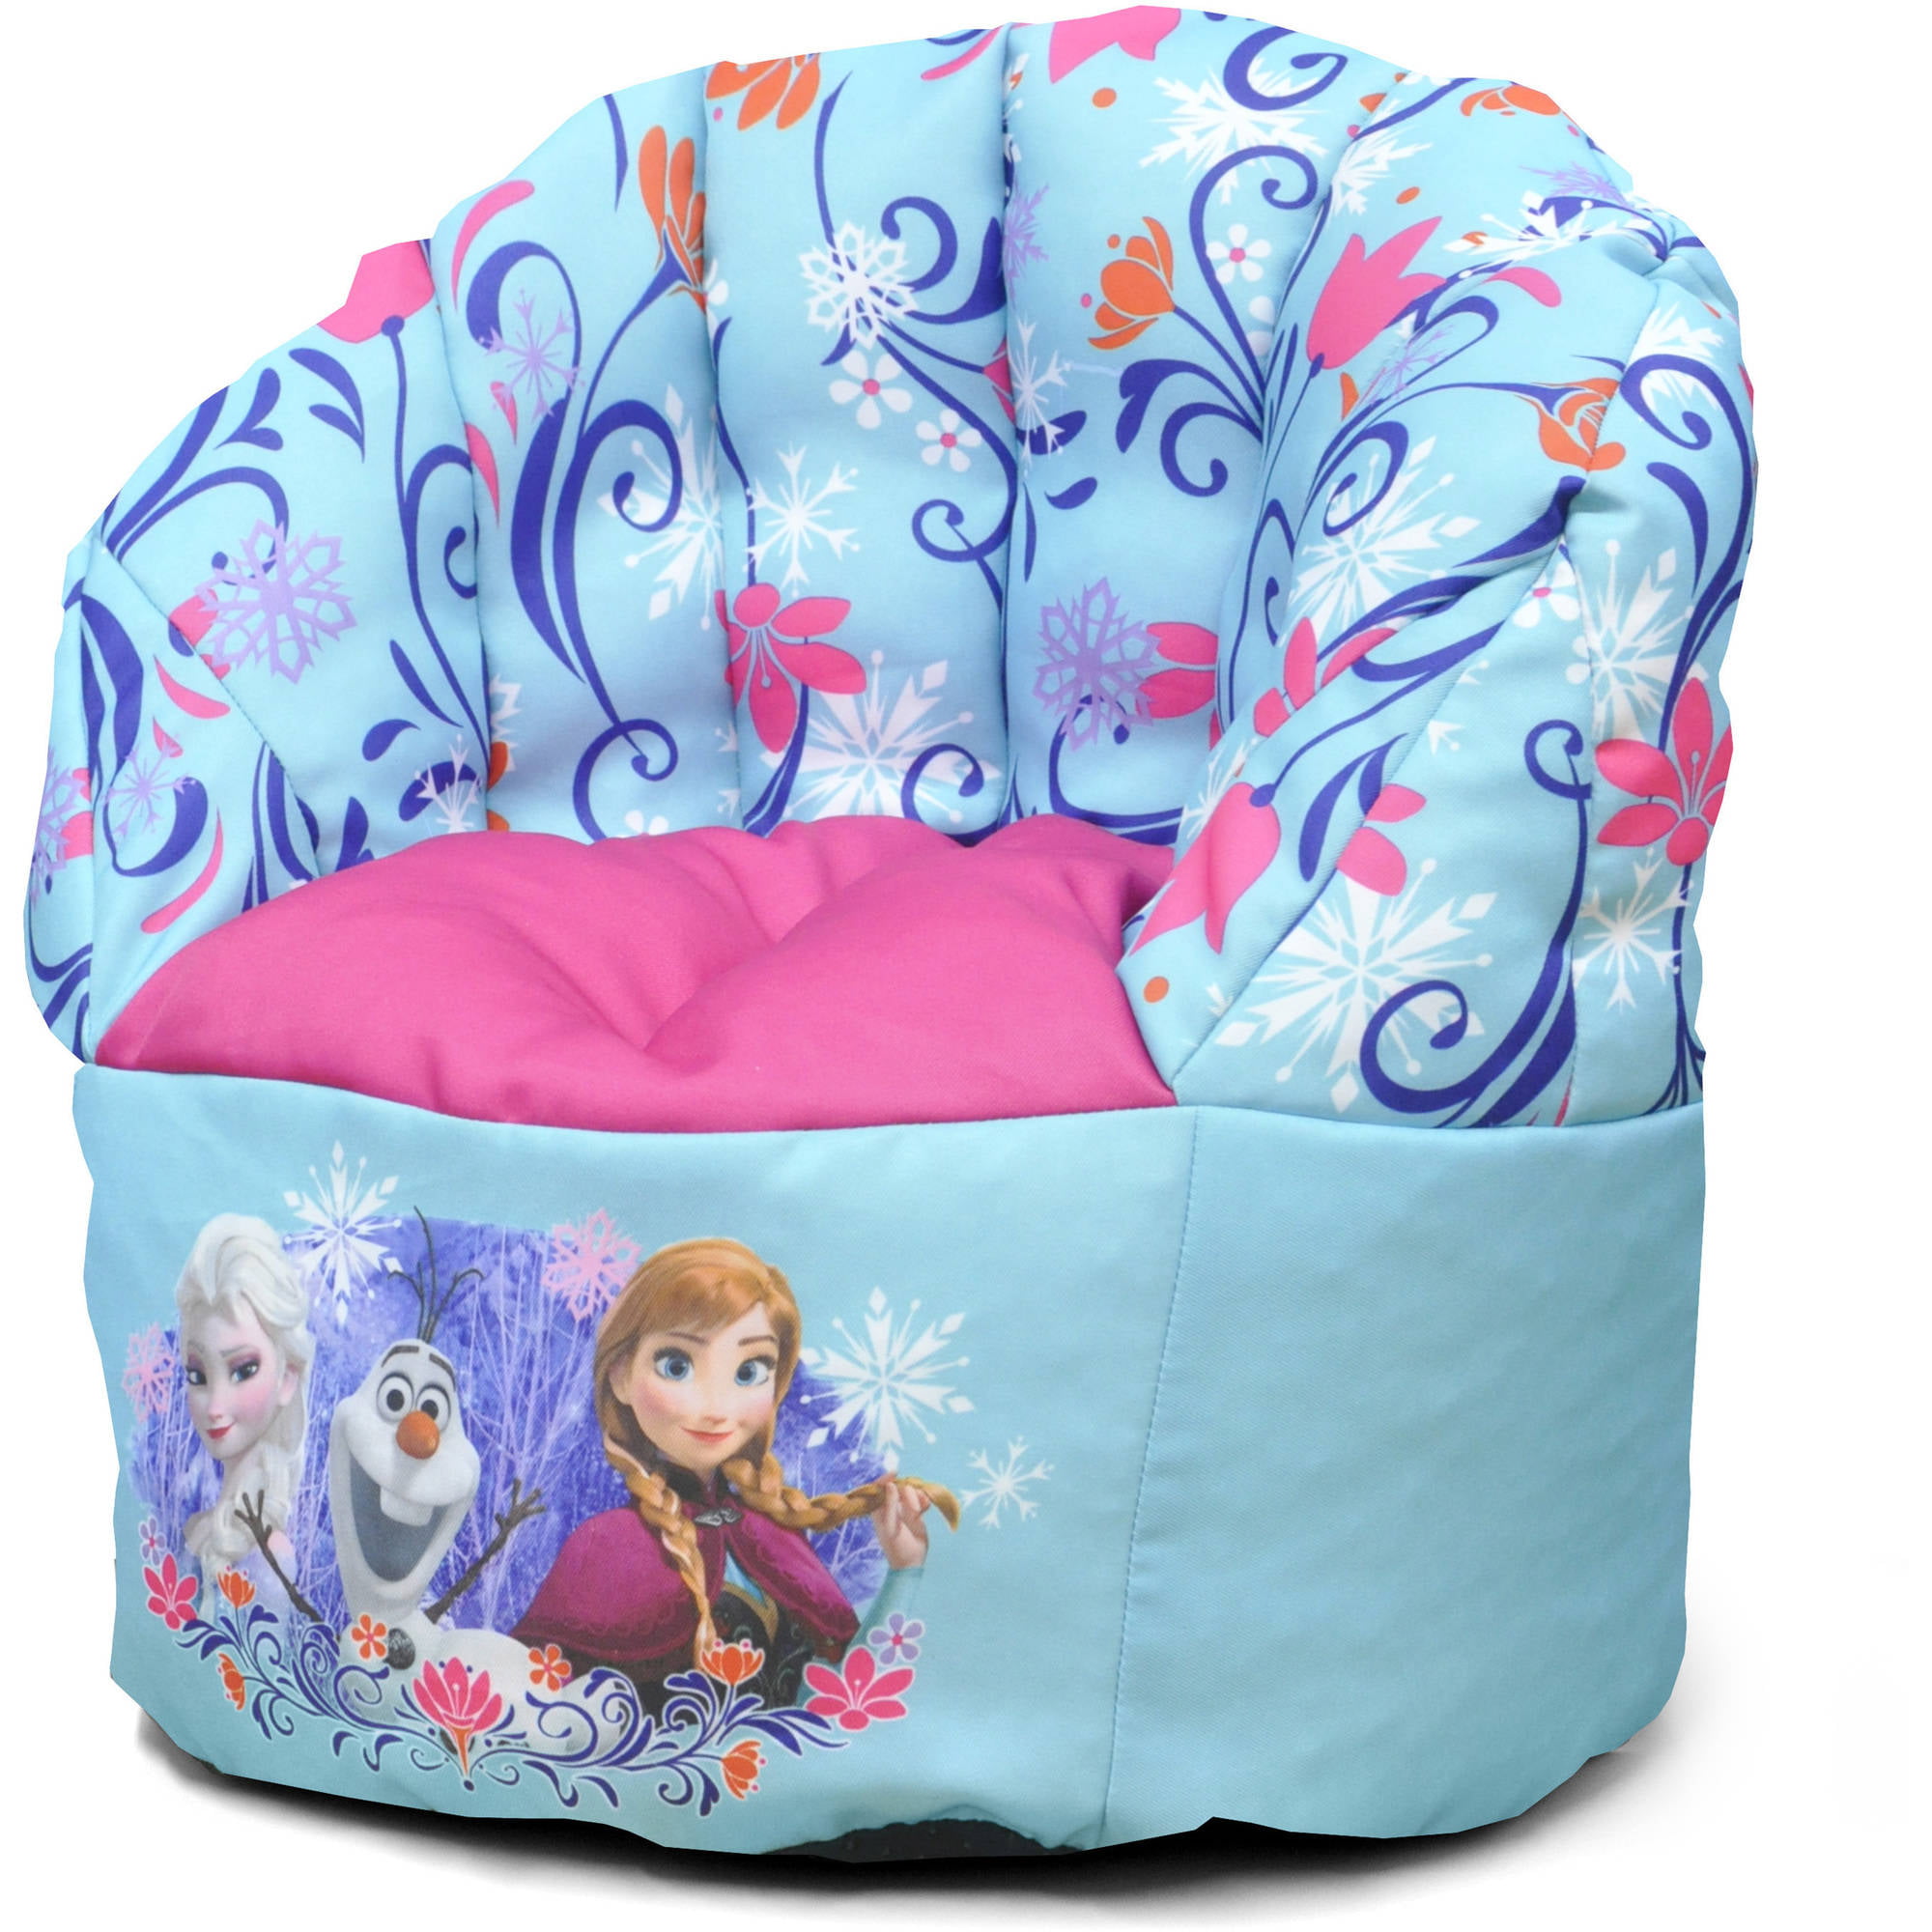 Disney Frozen Mini Bean Bag Chair